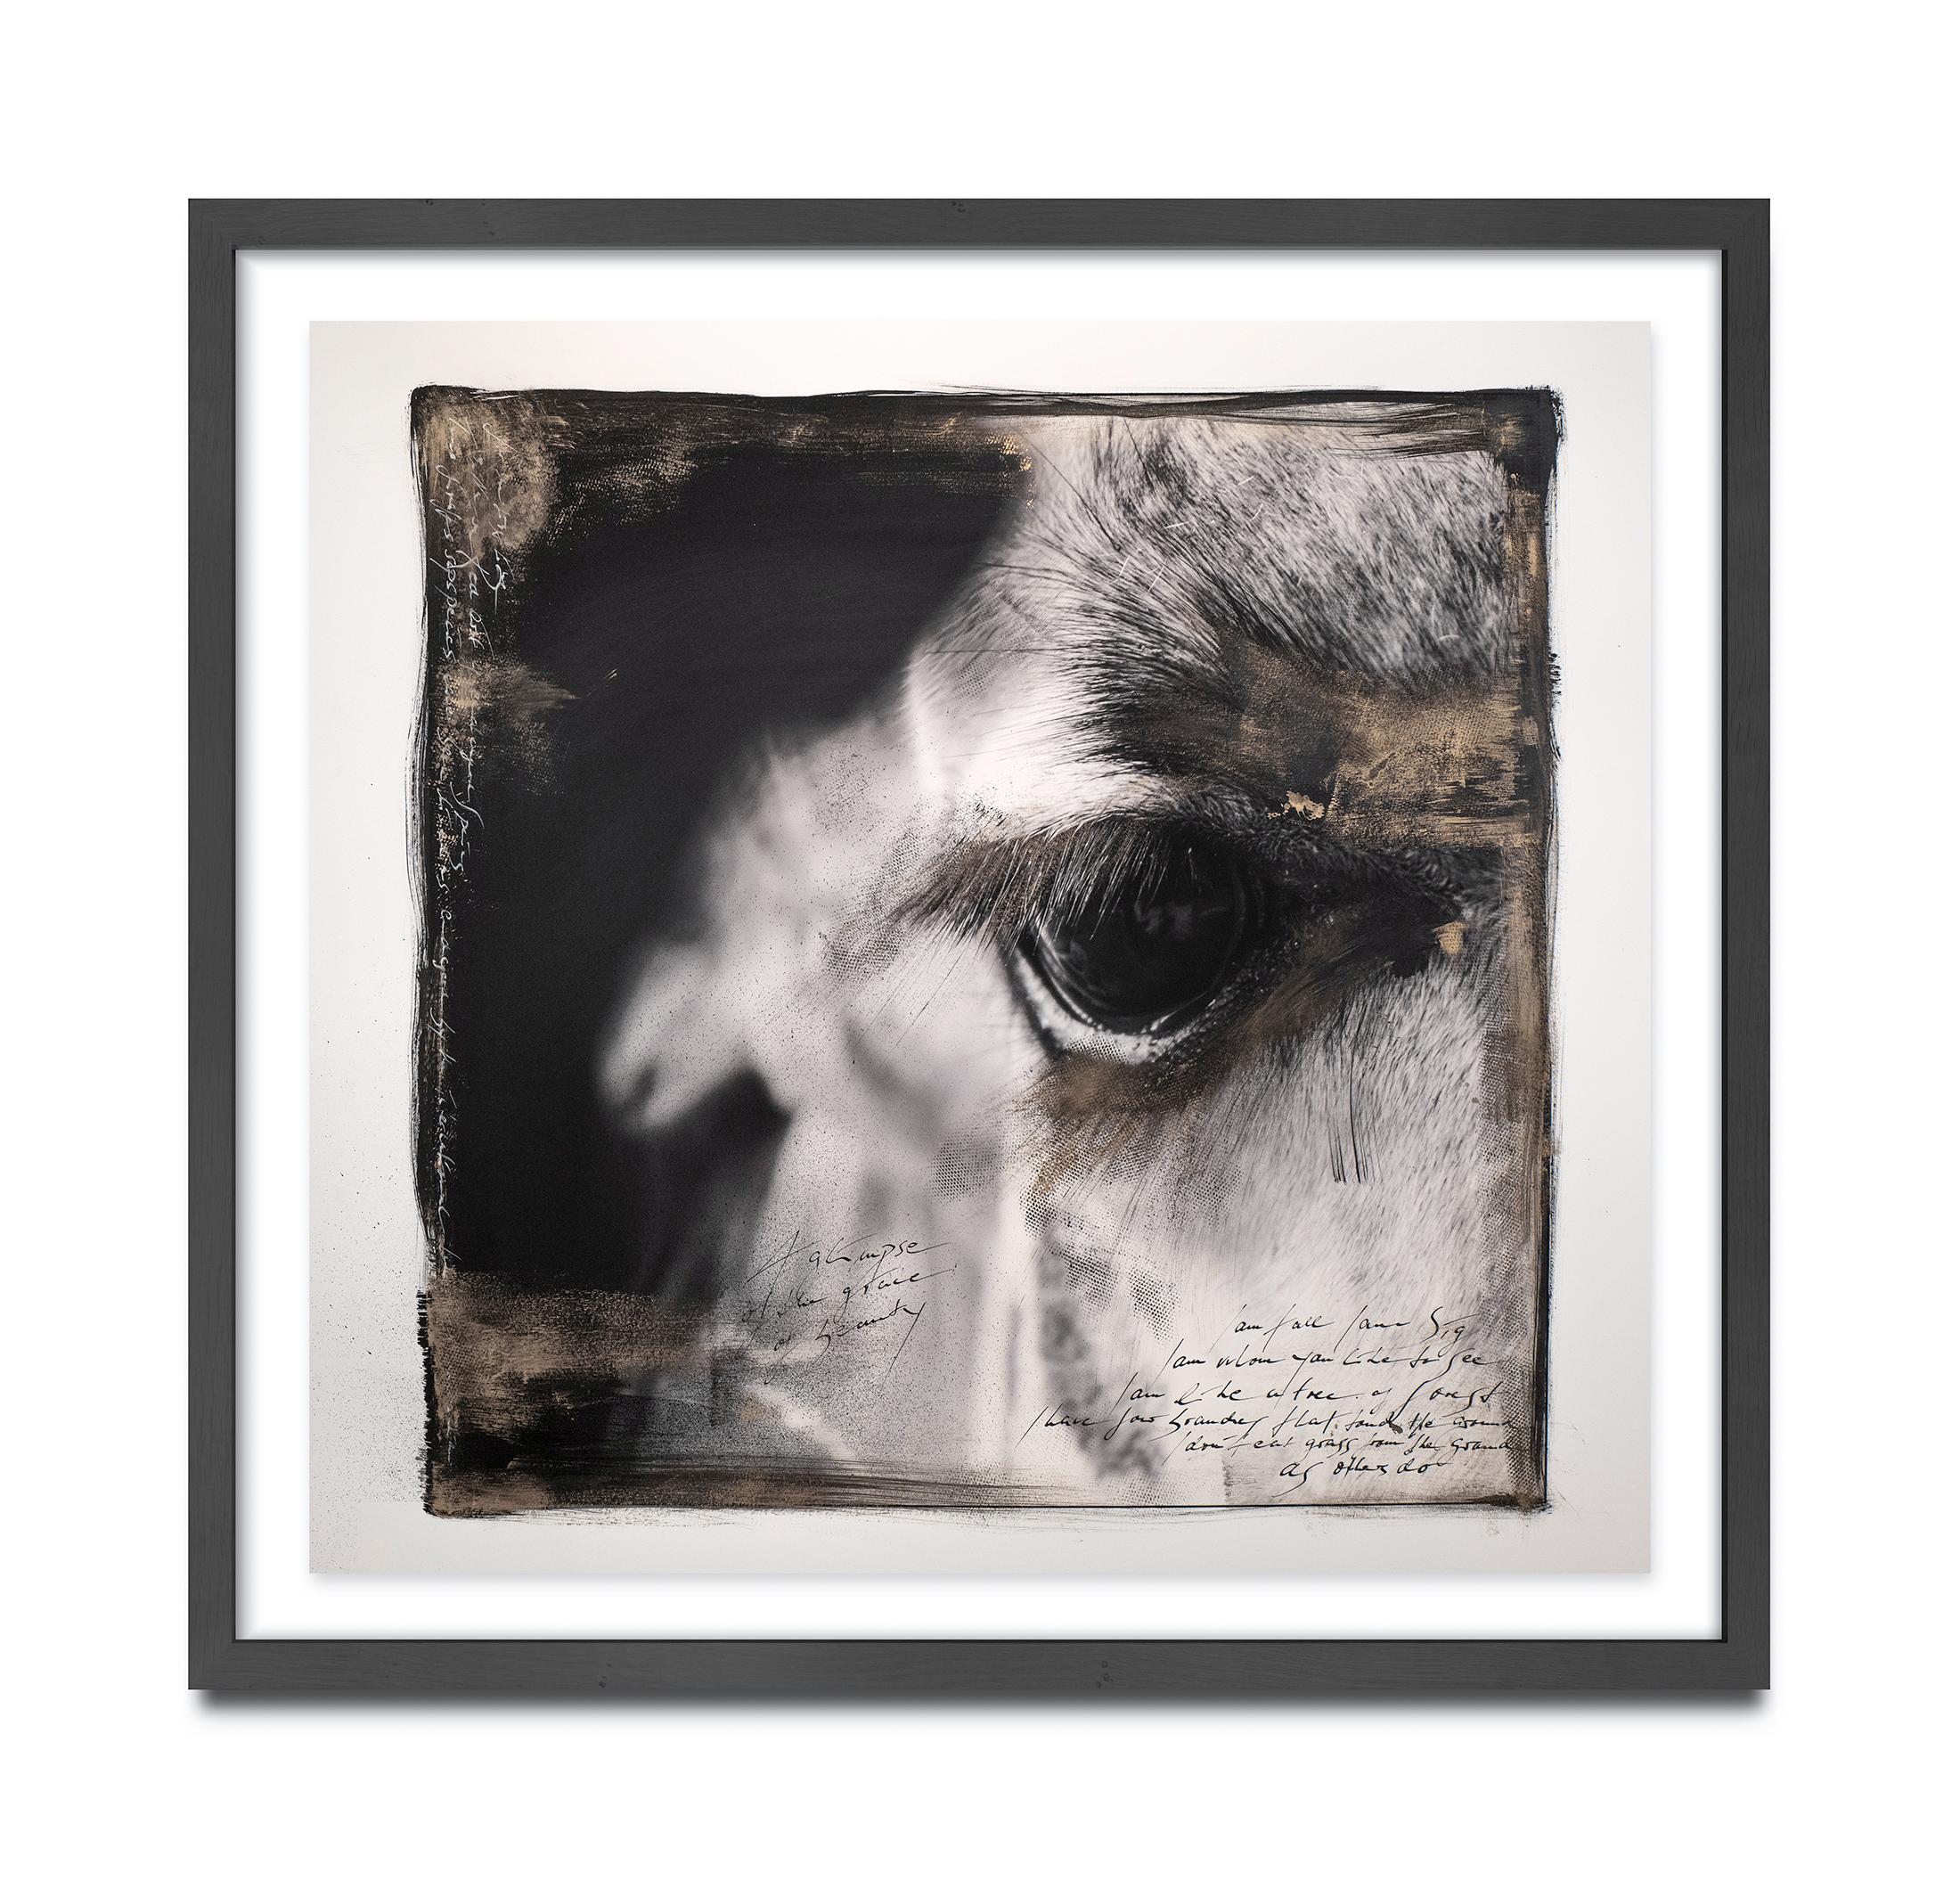 Joachim Schmeisser Black and White Photograph - Giraffe's Eye, Kenya, Elephant, Painting, Photography, Mixed Media